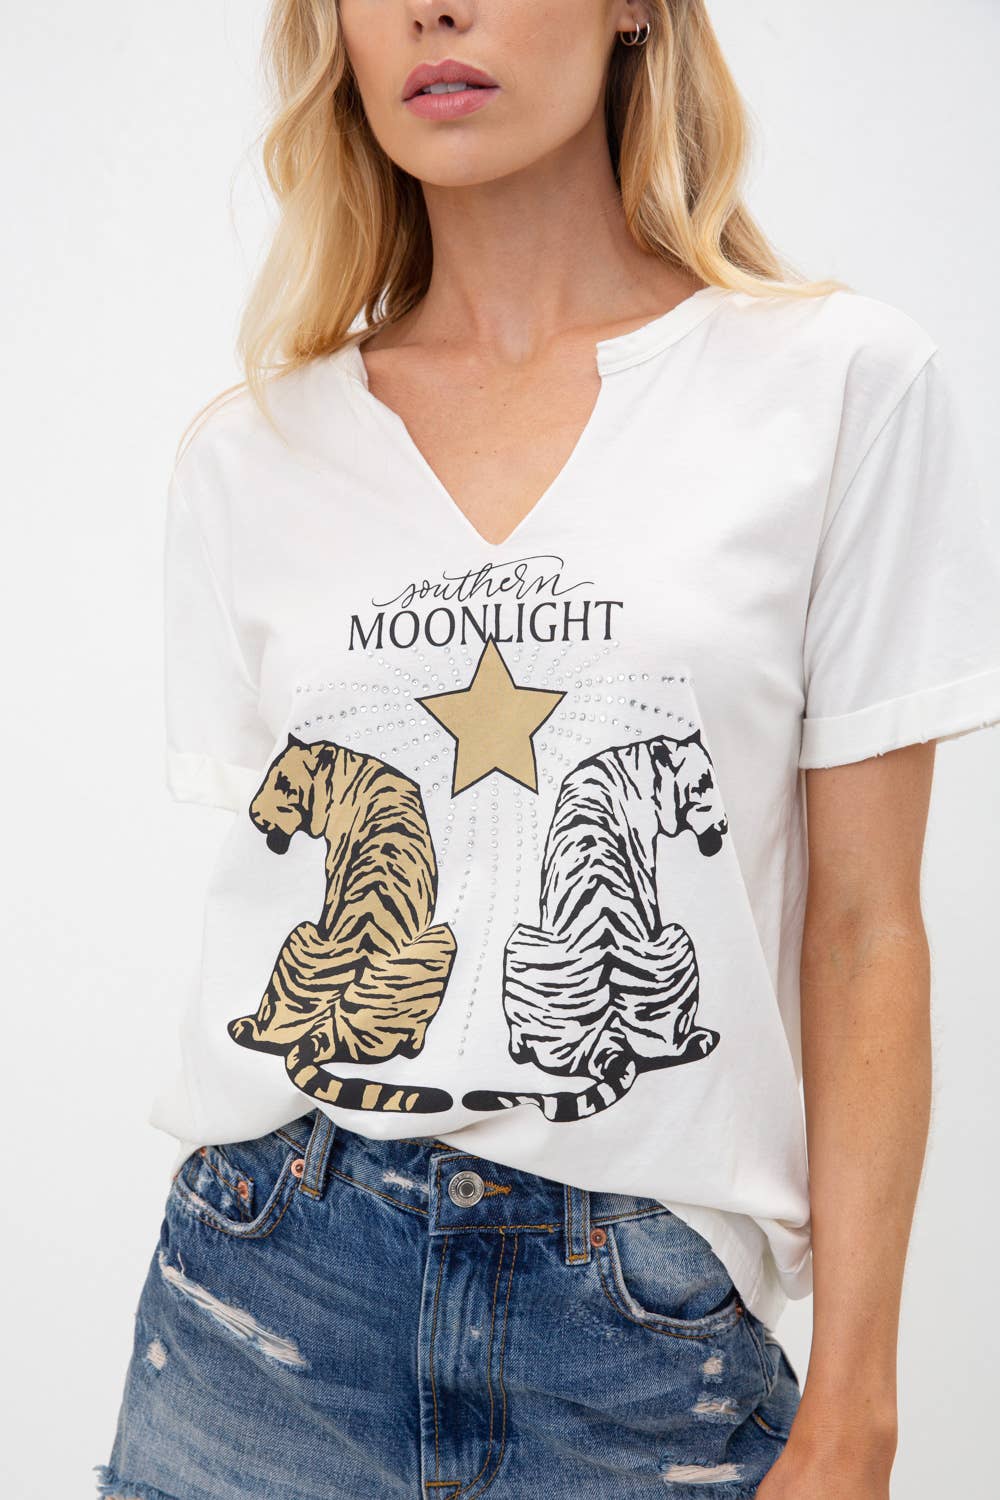 Cotton Distressed Rhinestone Star Tiger Moonlight